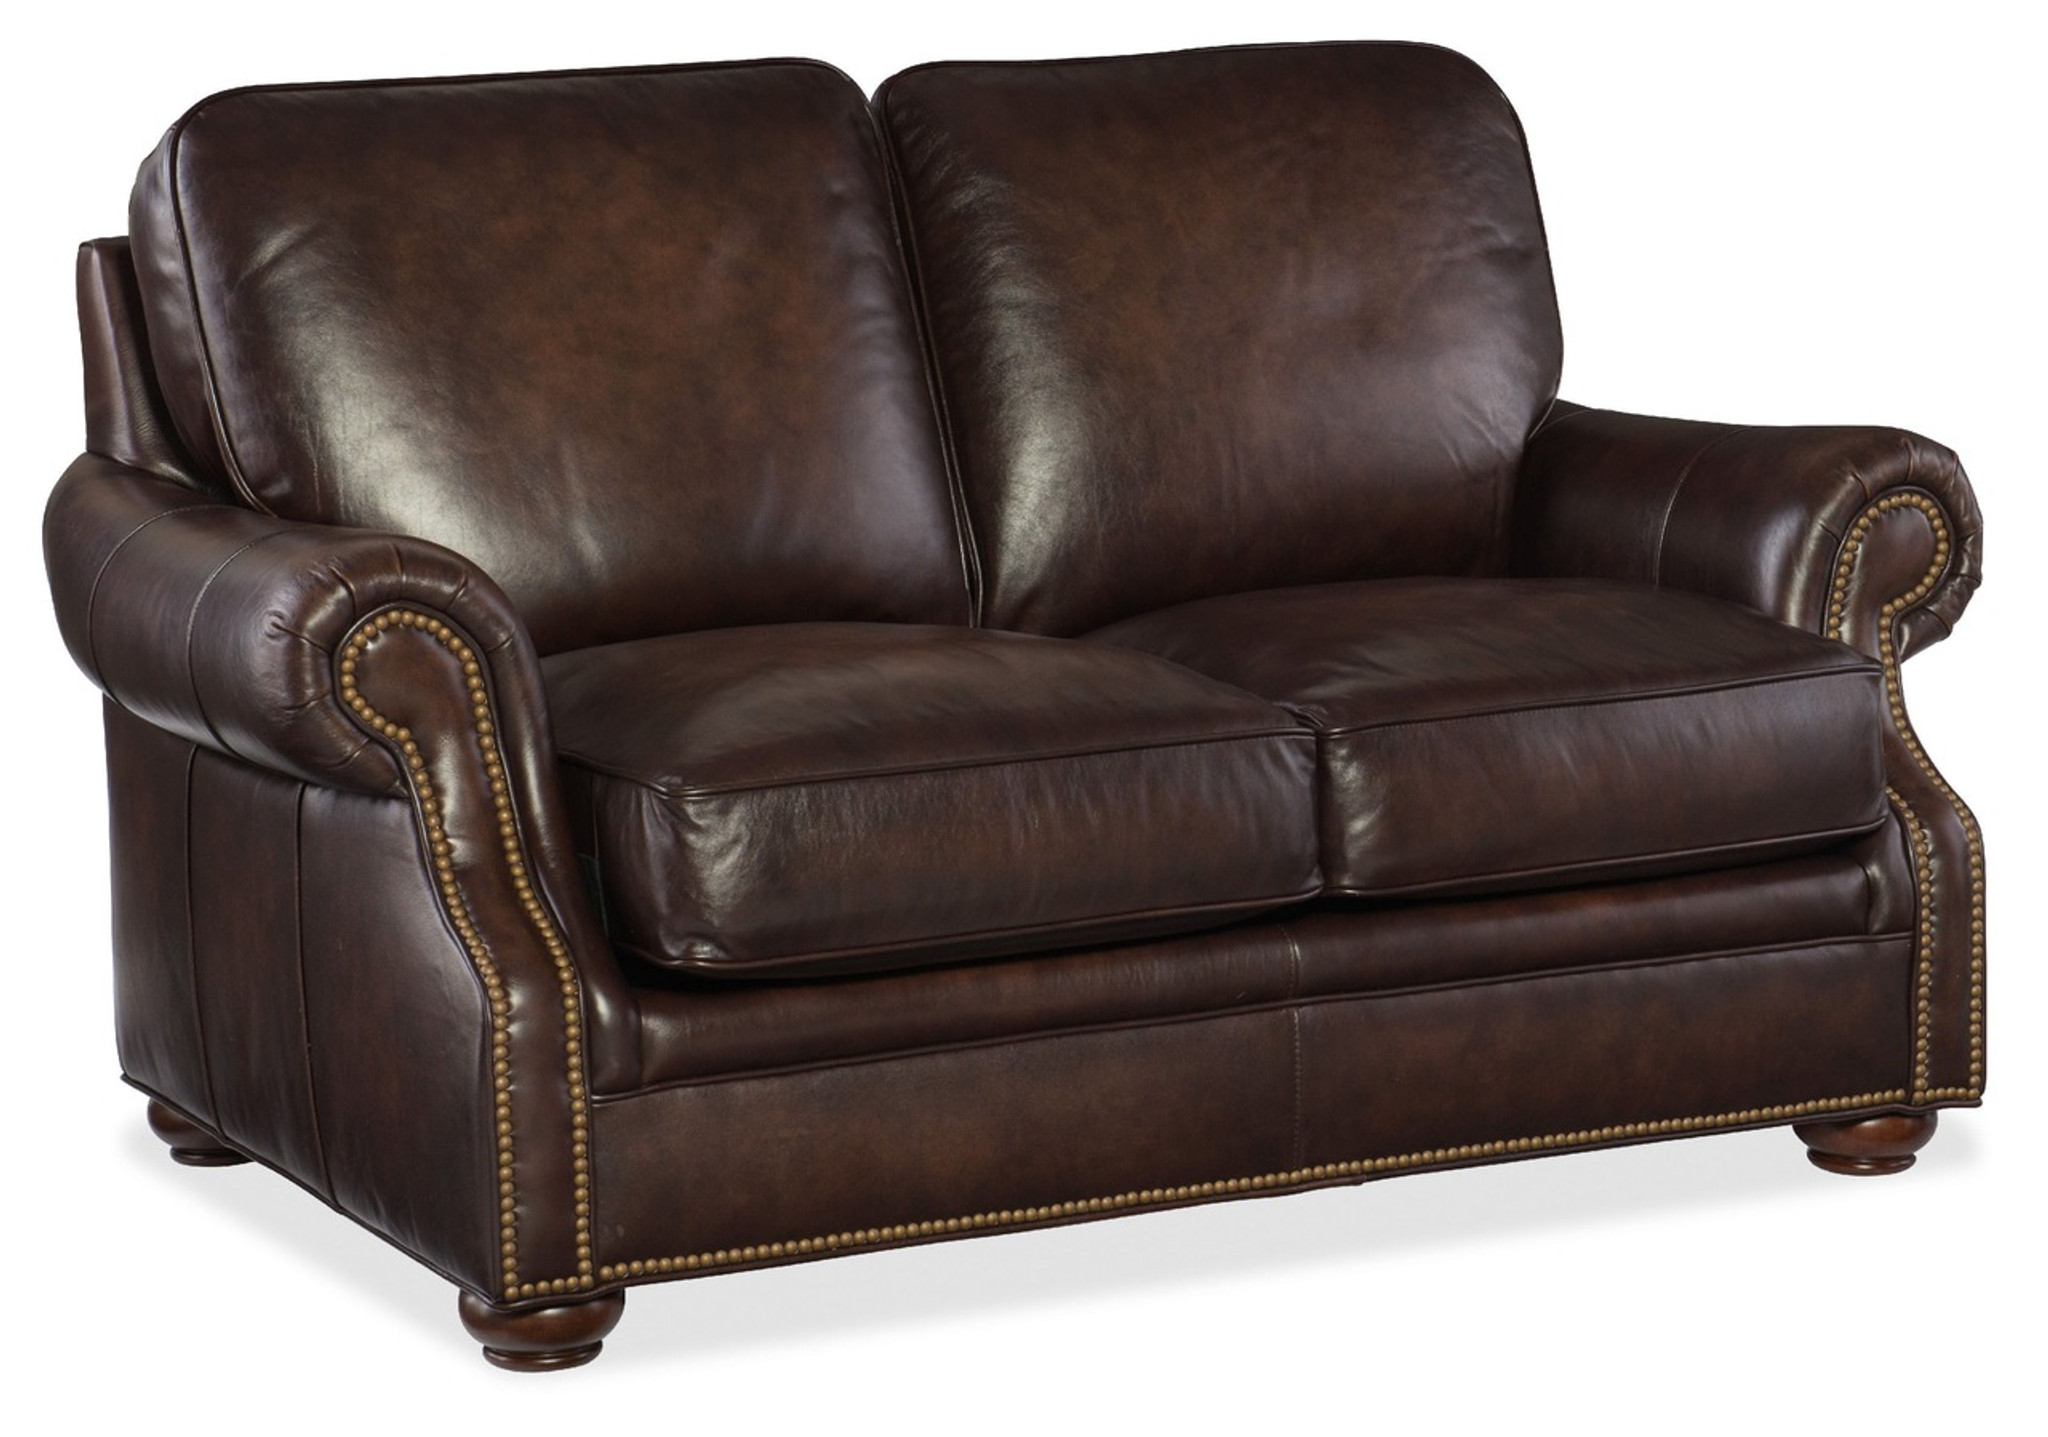 hooker leather recliner sofa